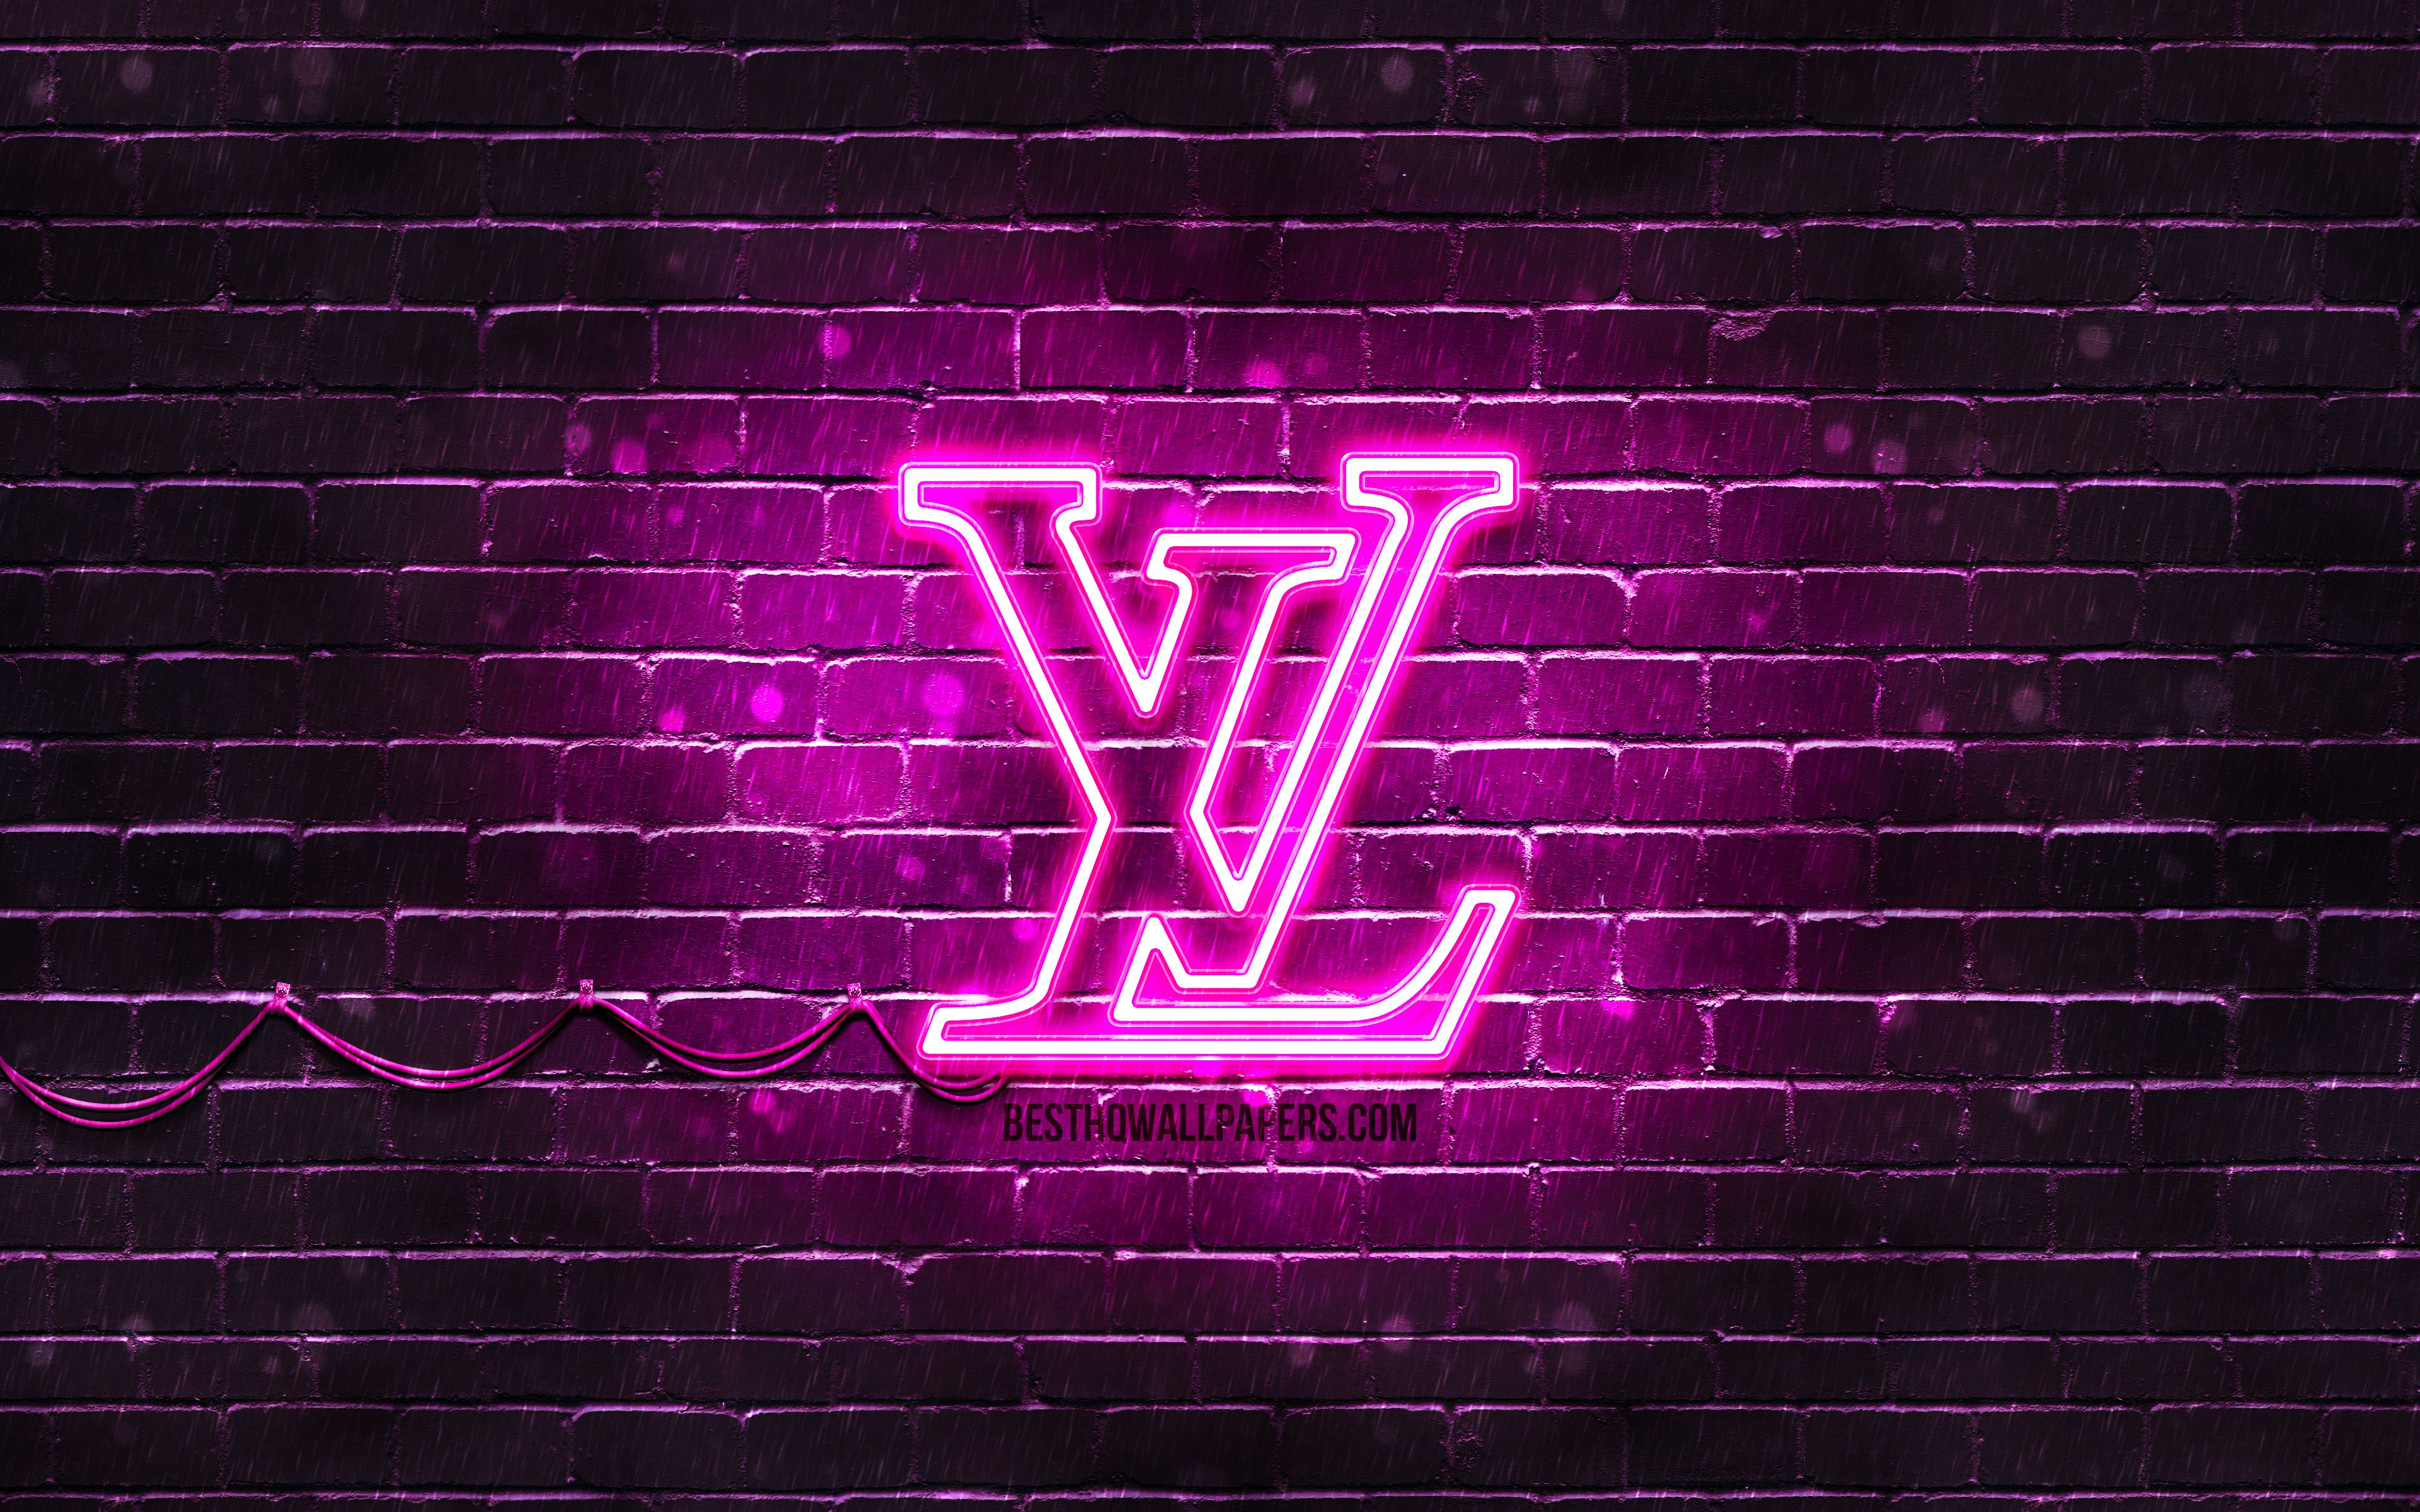 logo wallpaper purple